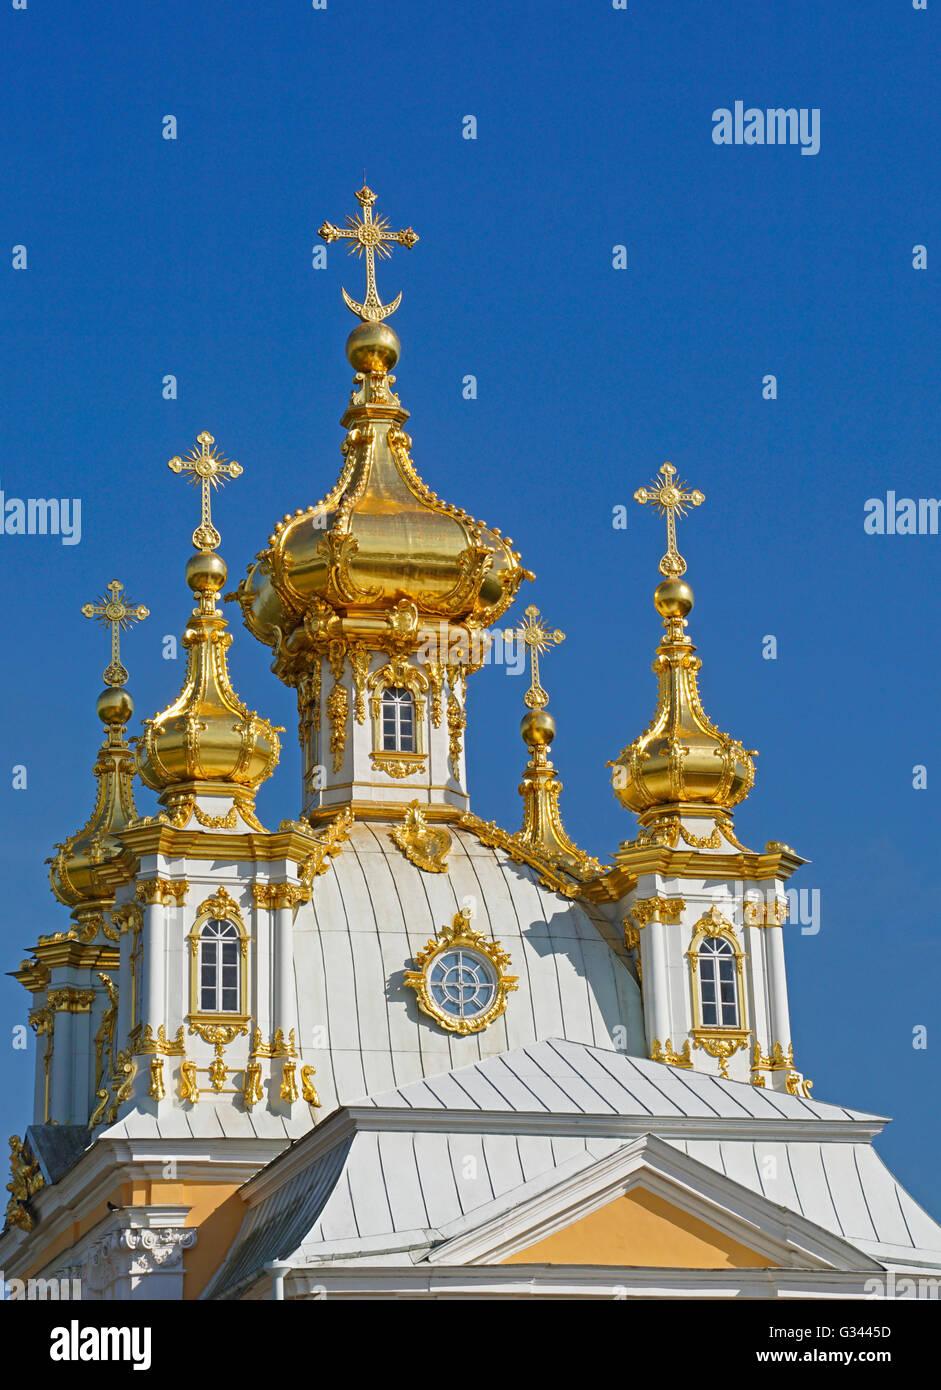 Peterhof Grand Palace Church steeple in St. Petersburg, Russia. Stock Photo